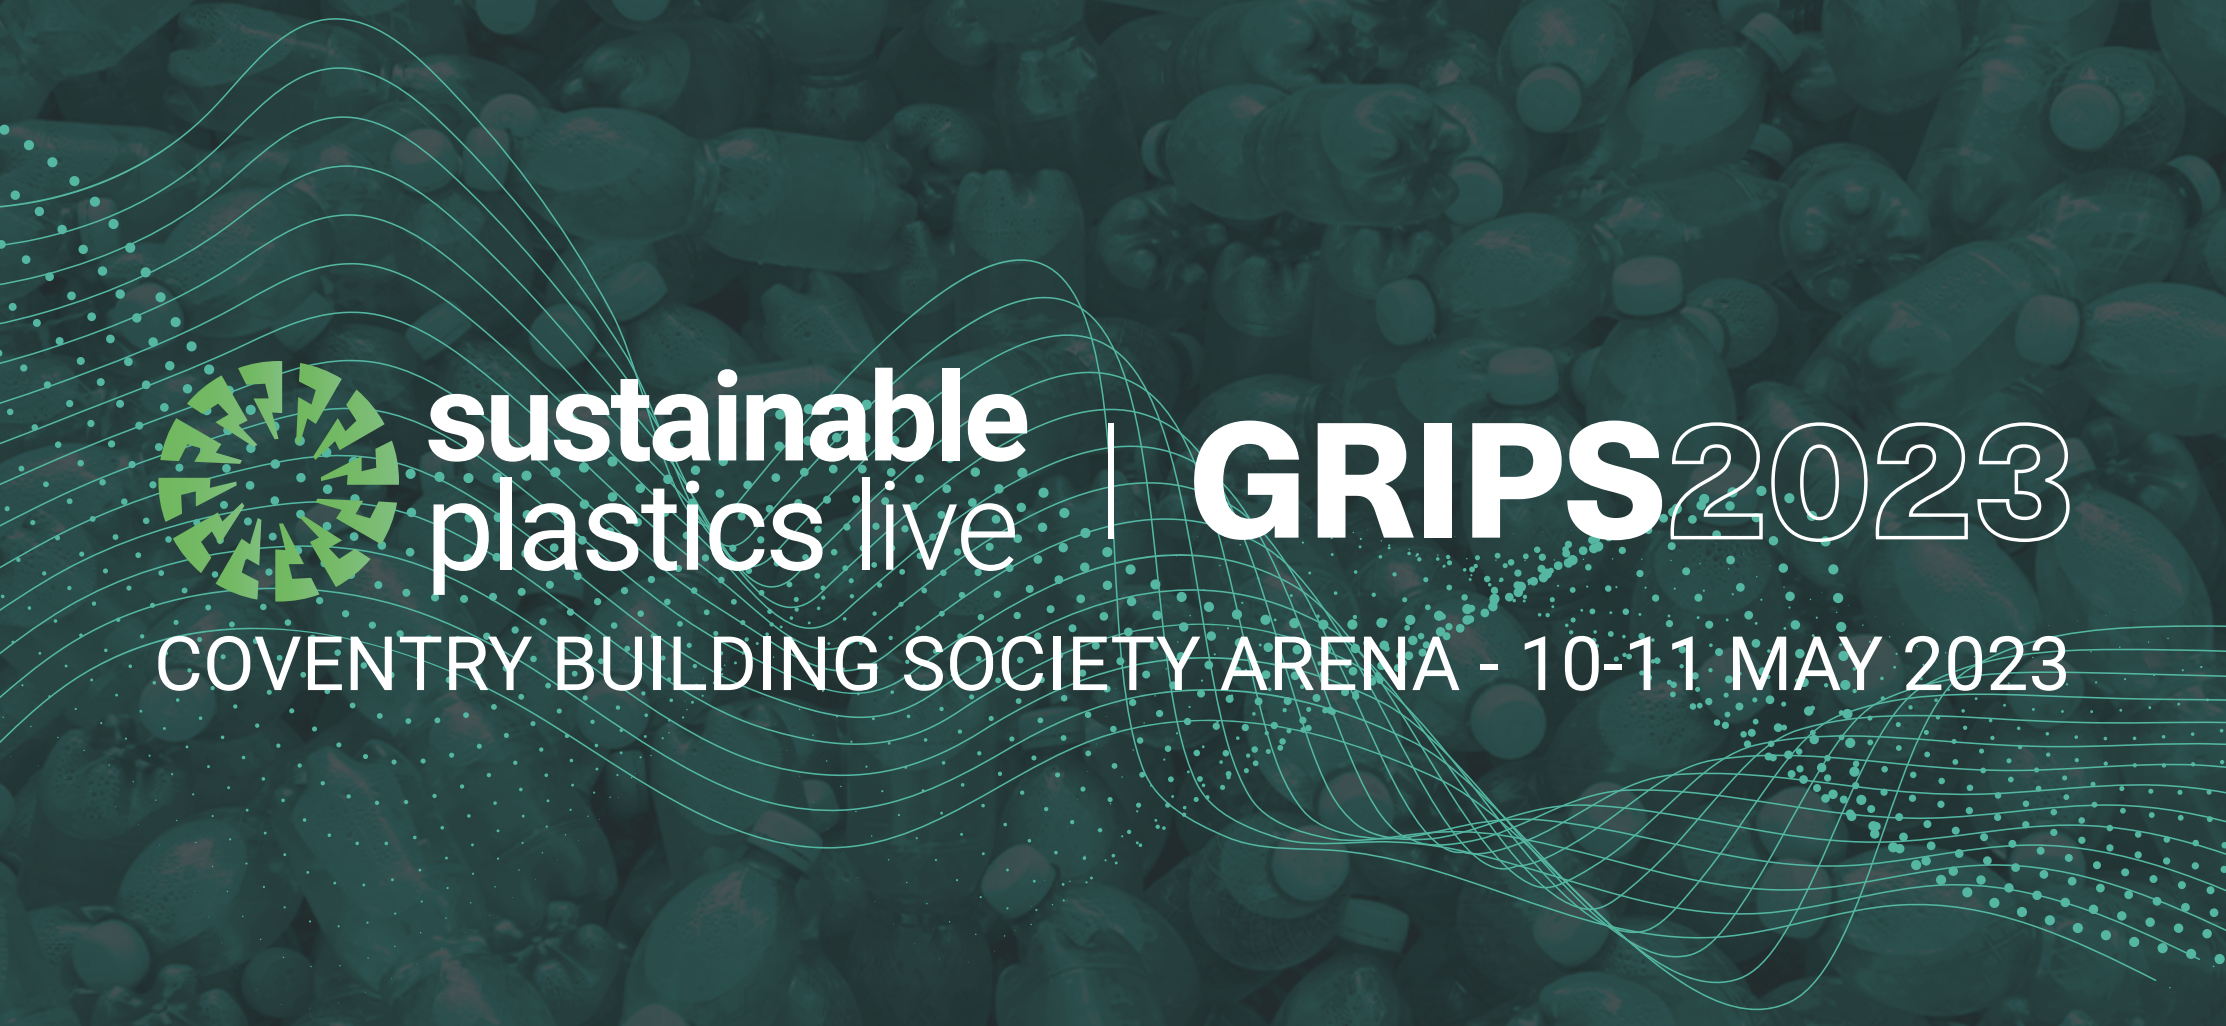 Sustainable Plastics Live/GRIPS Brochure